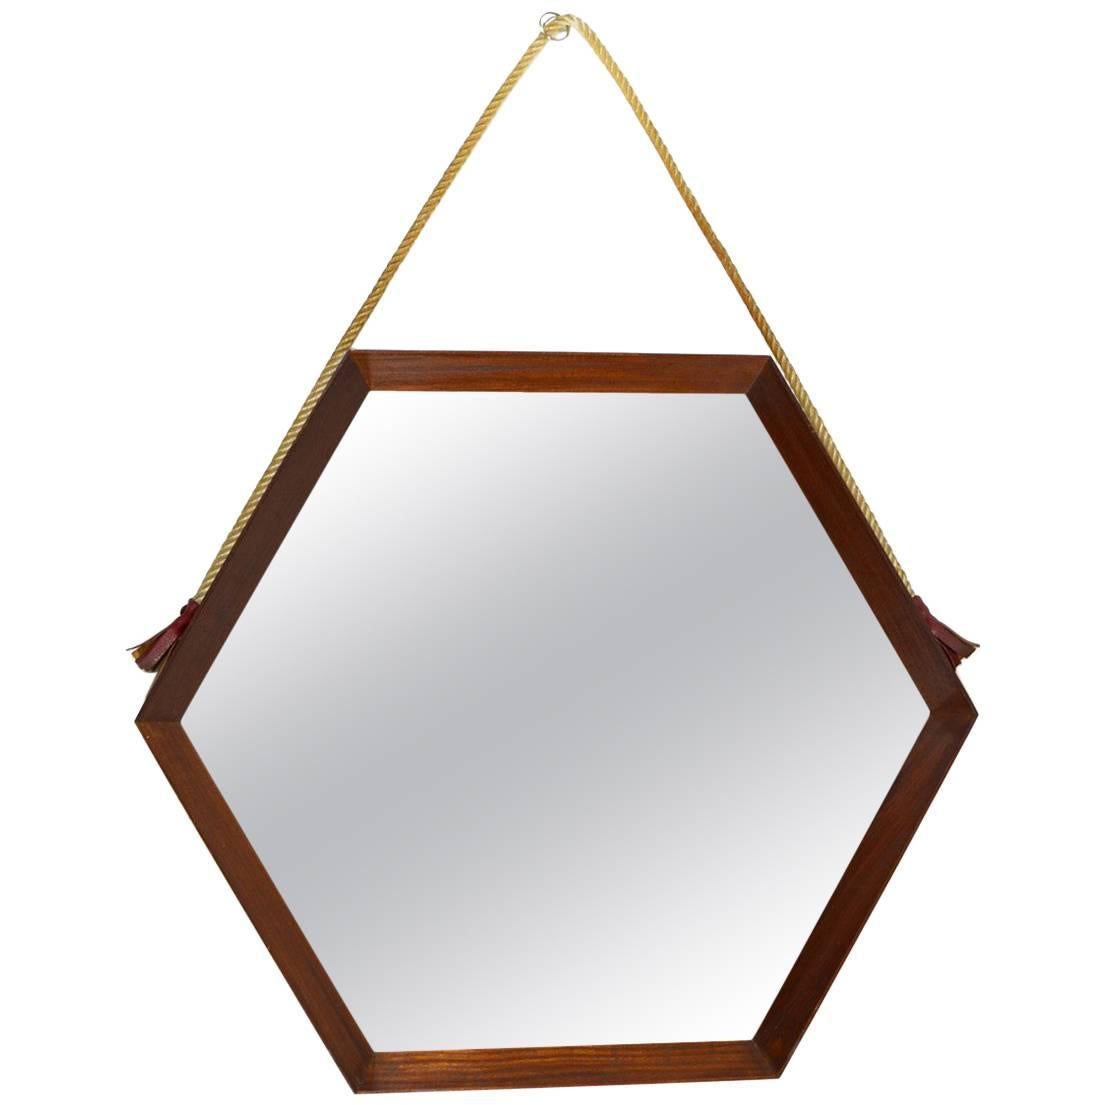 Italian Midcentury Teak Wood Hexagonal Mirror For Sale